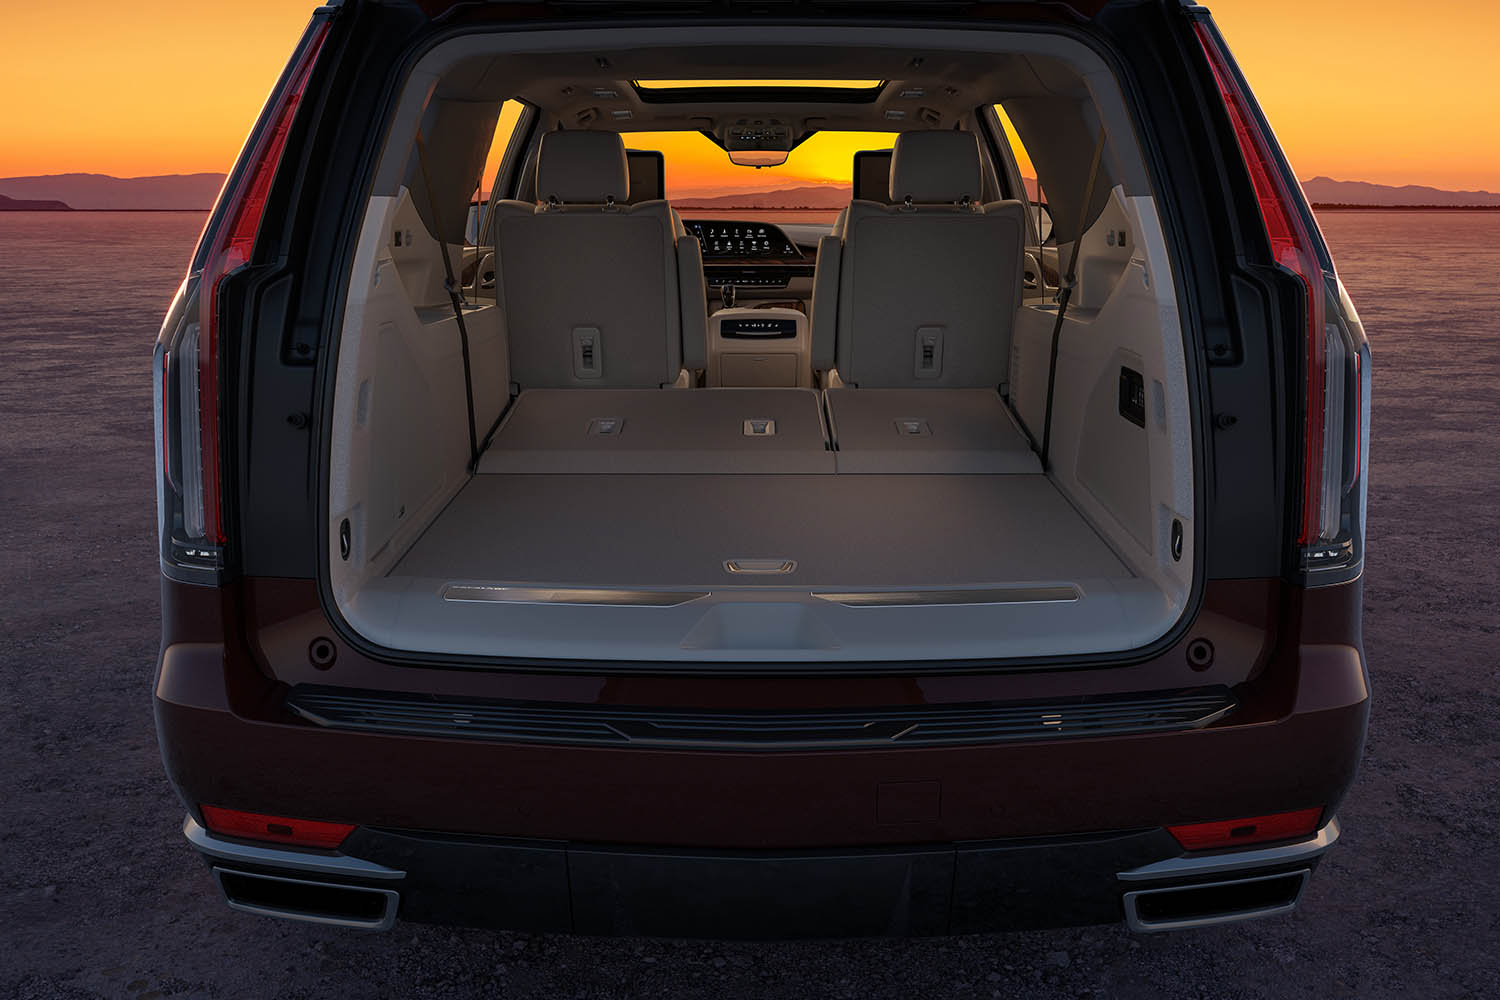 Back view of 2023 Cadillac Escalade ESV with rear door open to show interior cargo space